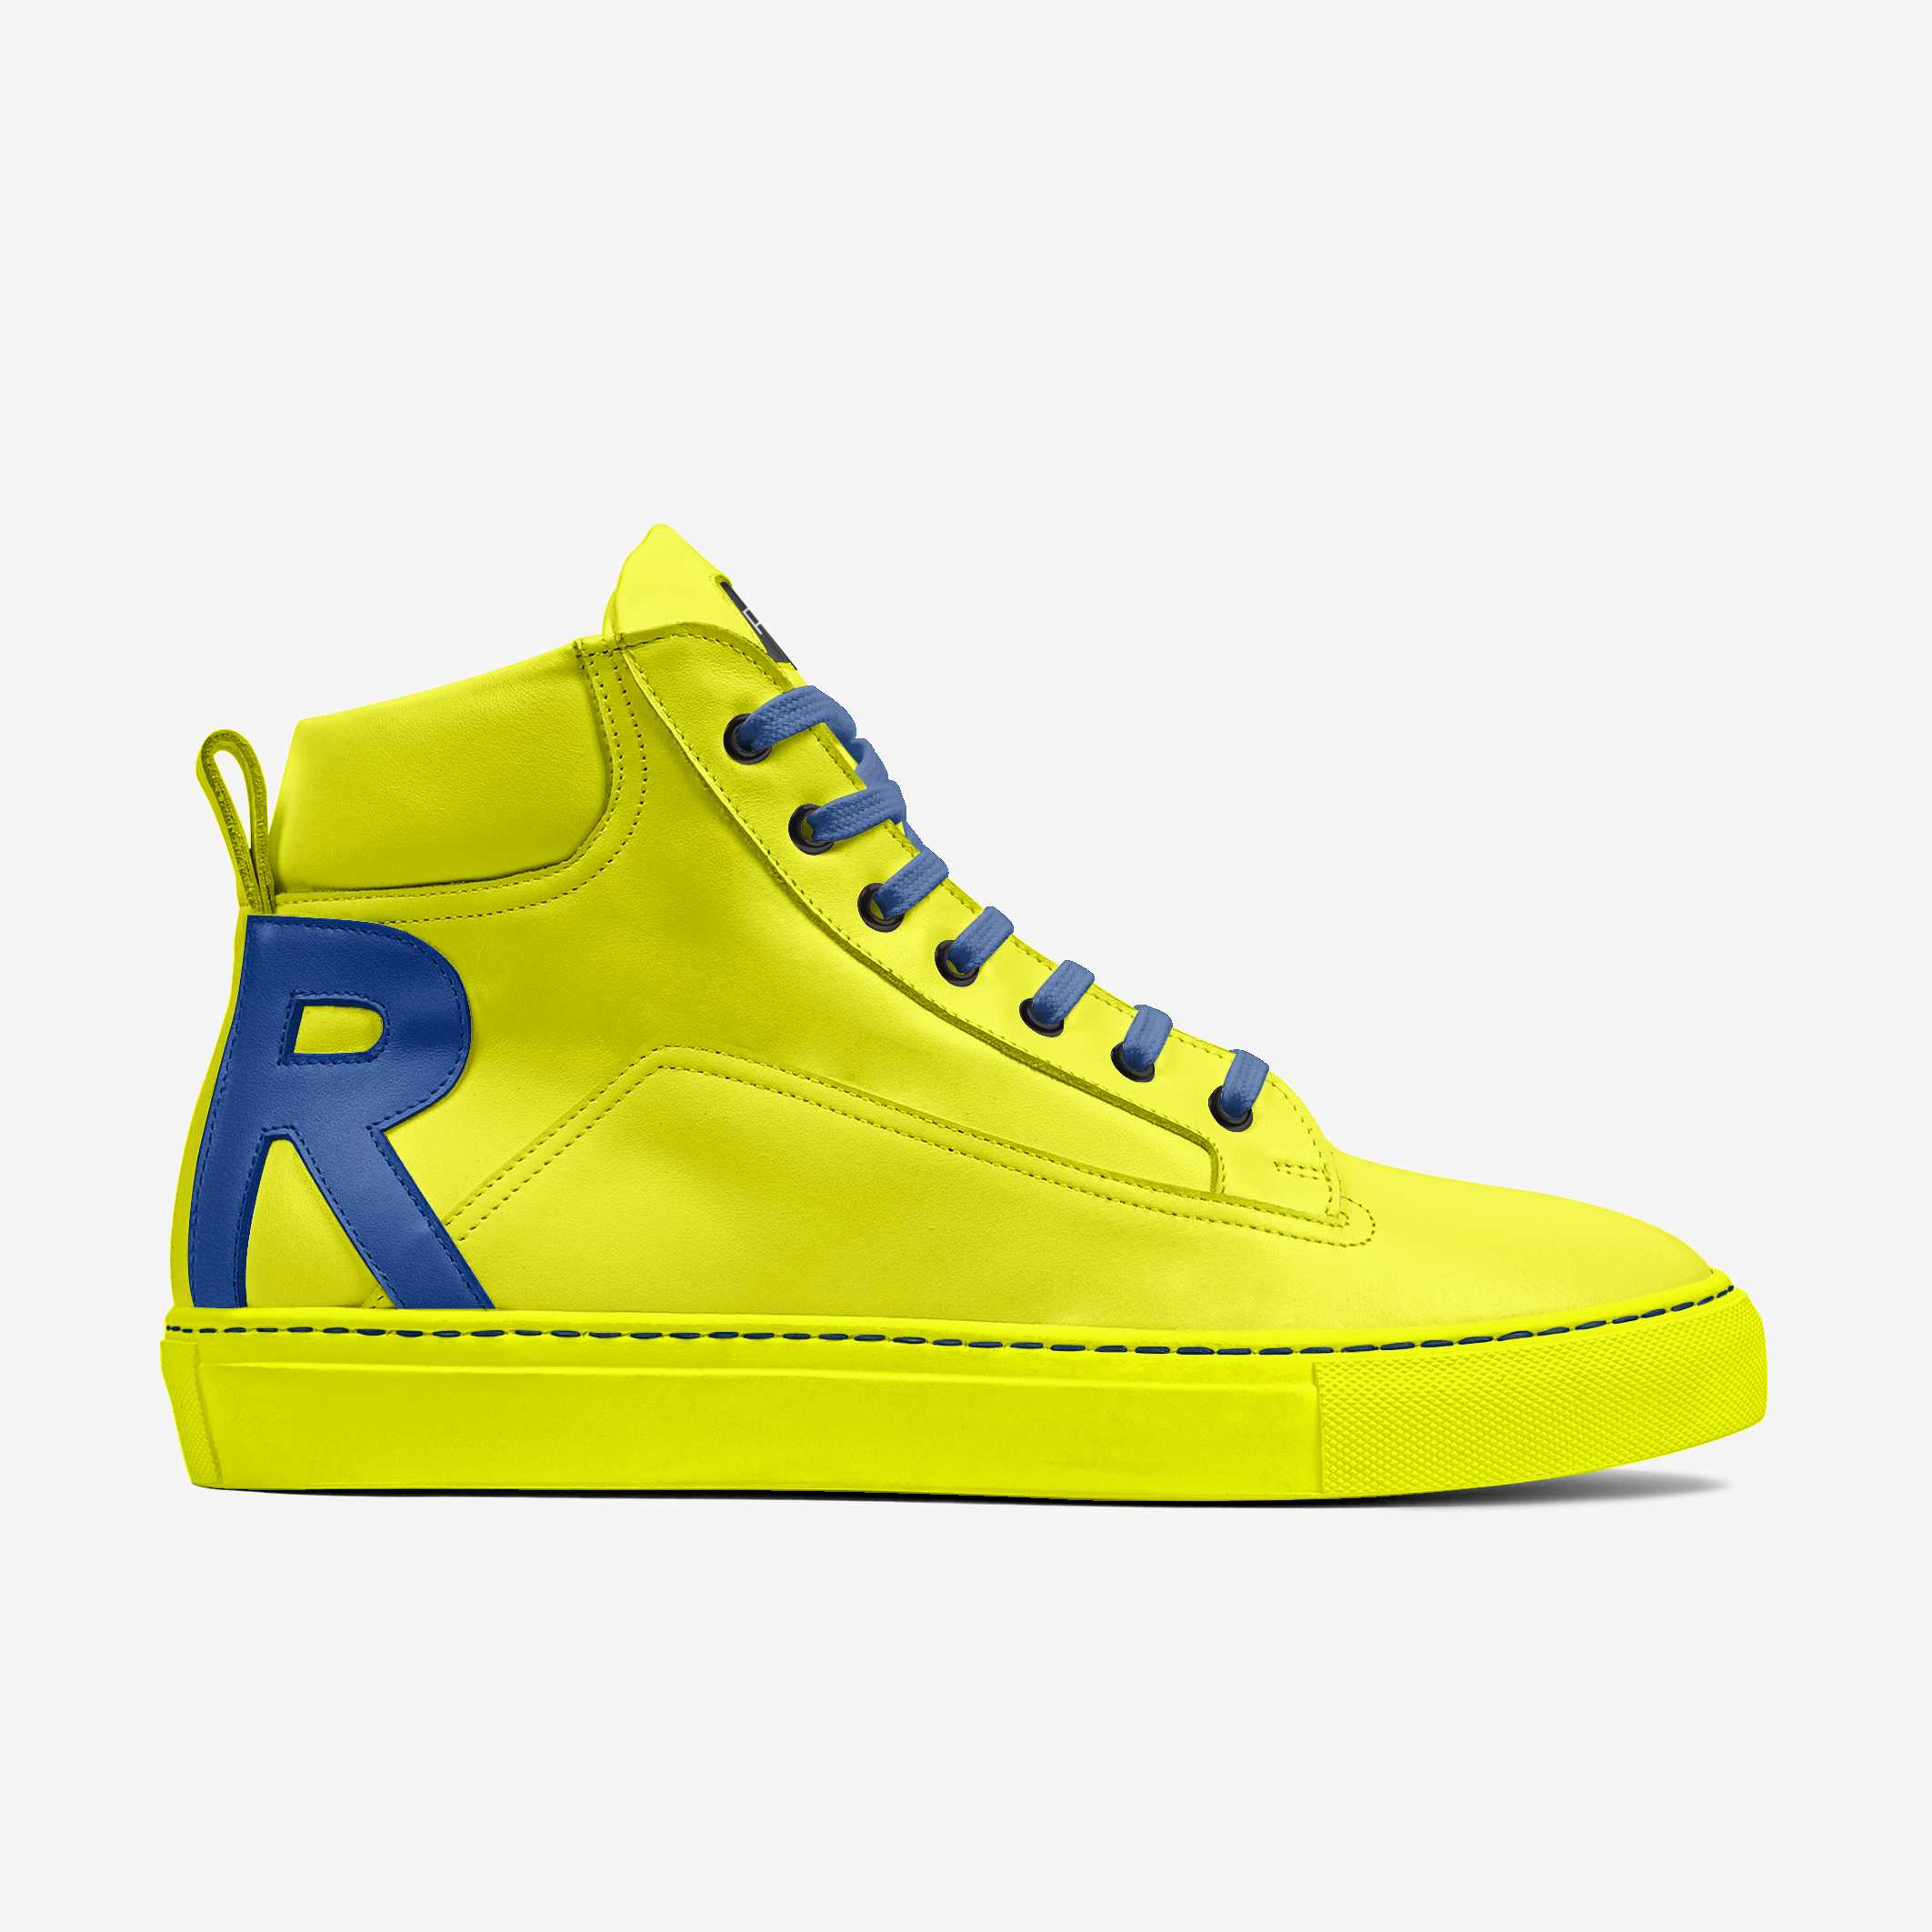 O.G. RIDDICK [Yellow Silicon] - Riddick Shoes Shoe Riddick Shoes   